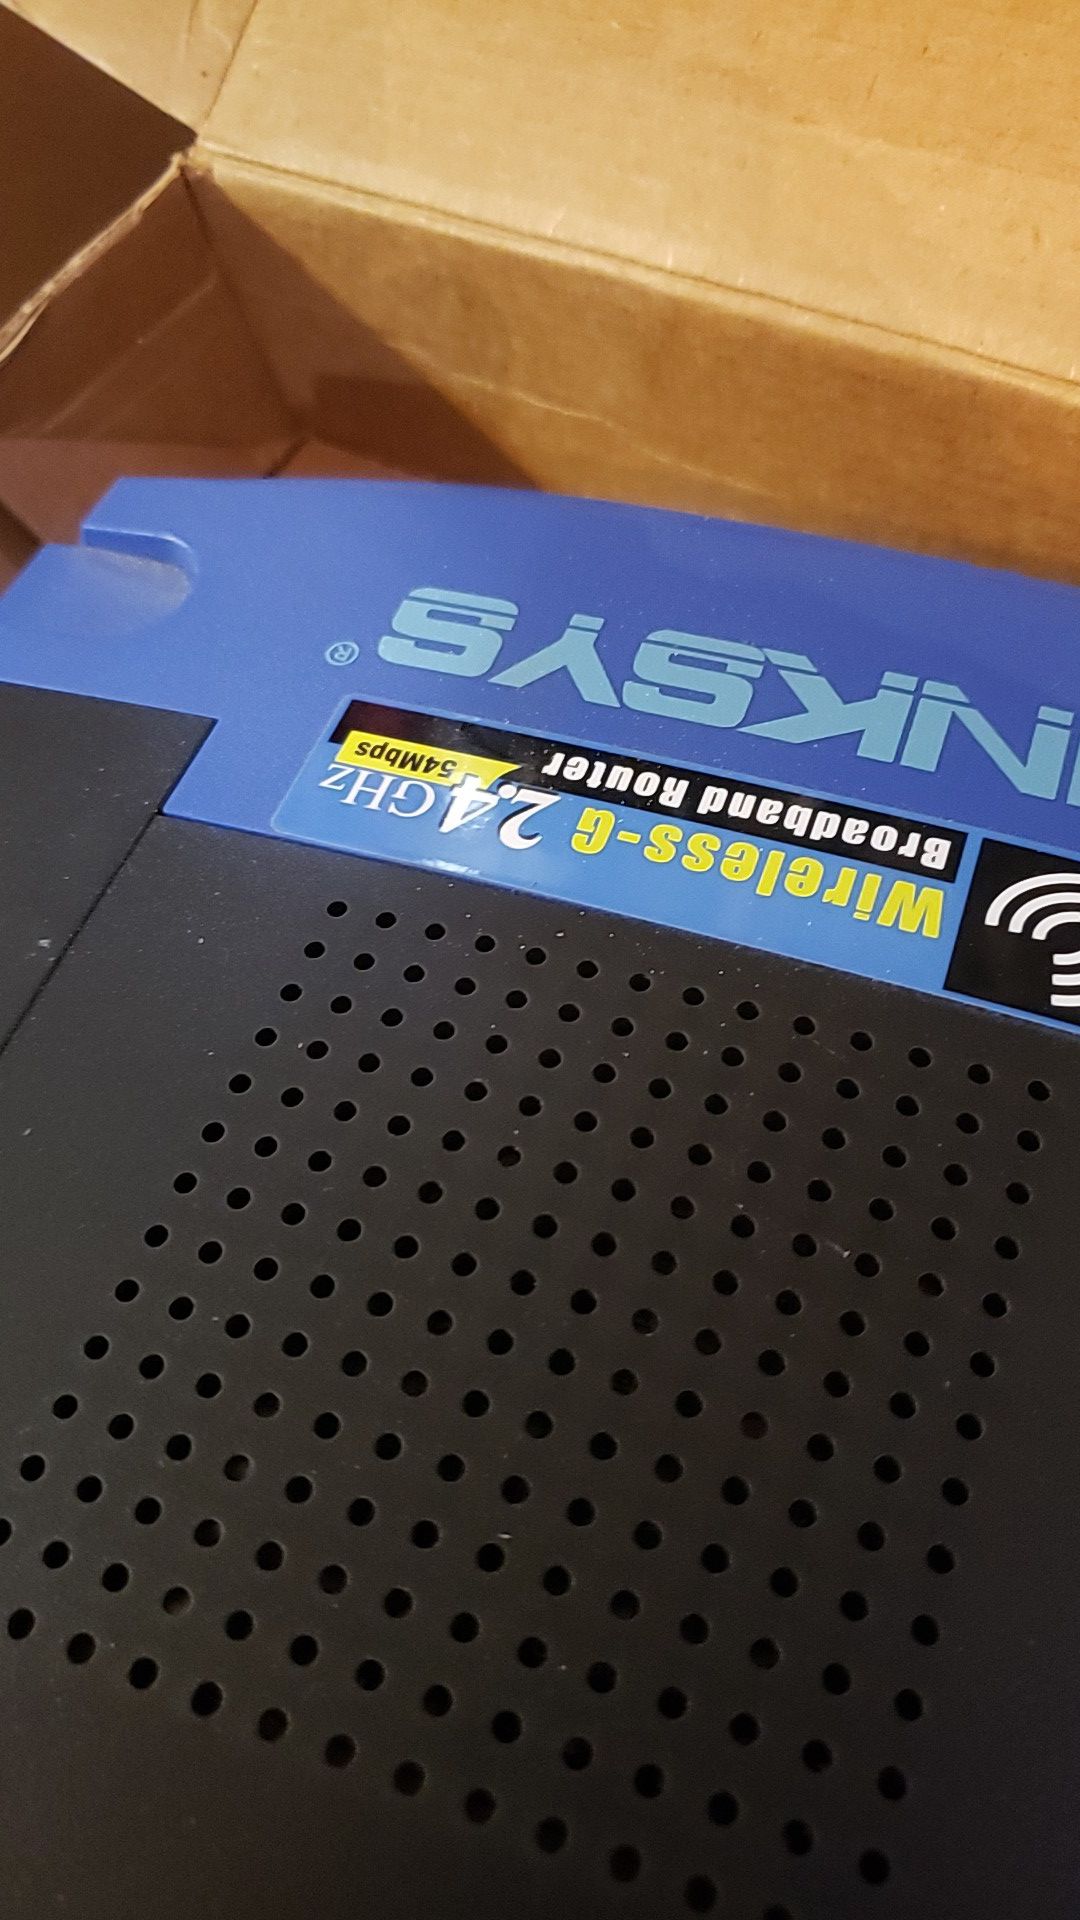 Linksys wireless broadband router